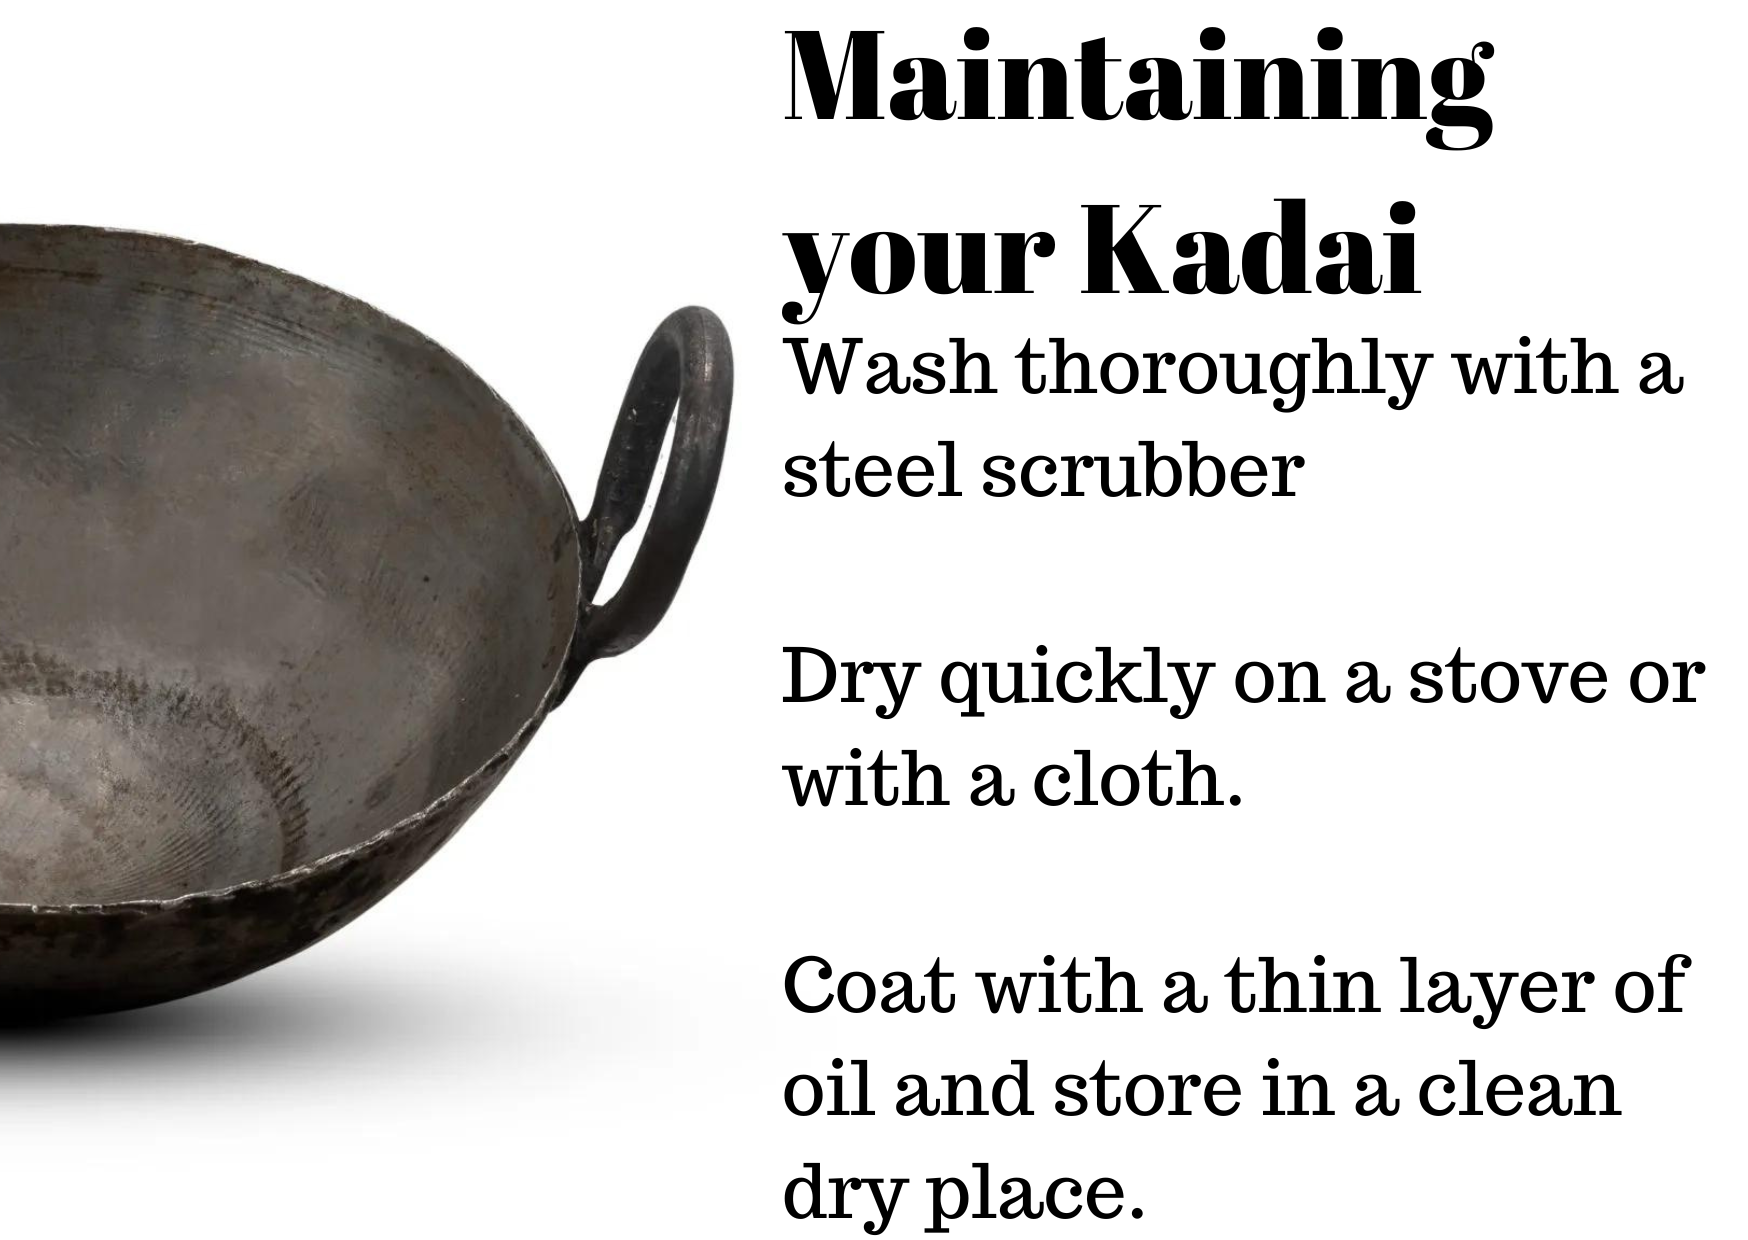 How To Season And Maintain A Cast Iron Skillet - Iron Kadai